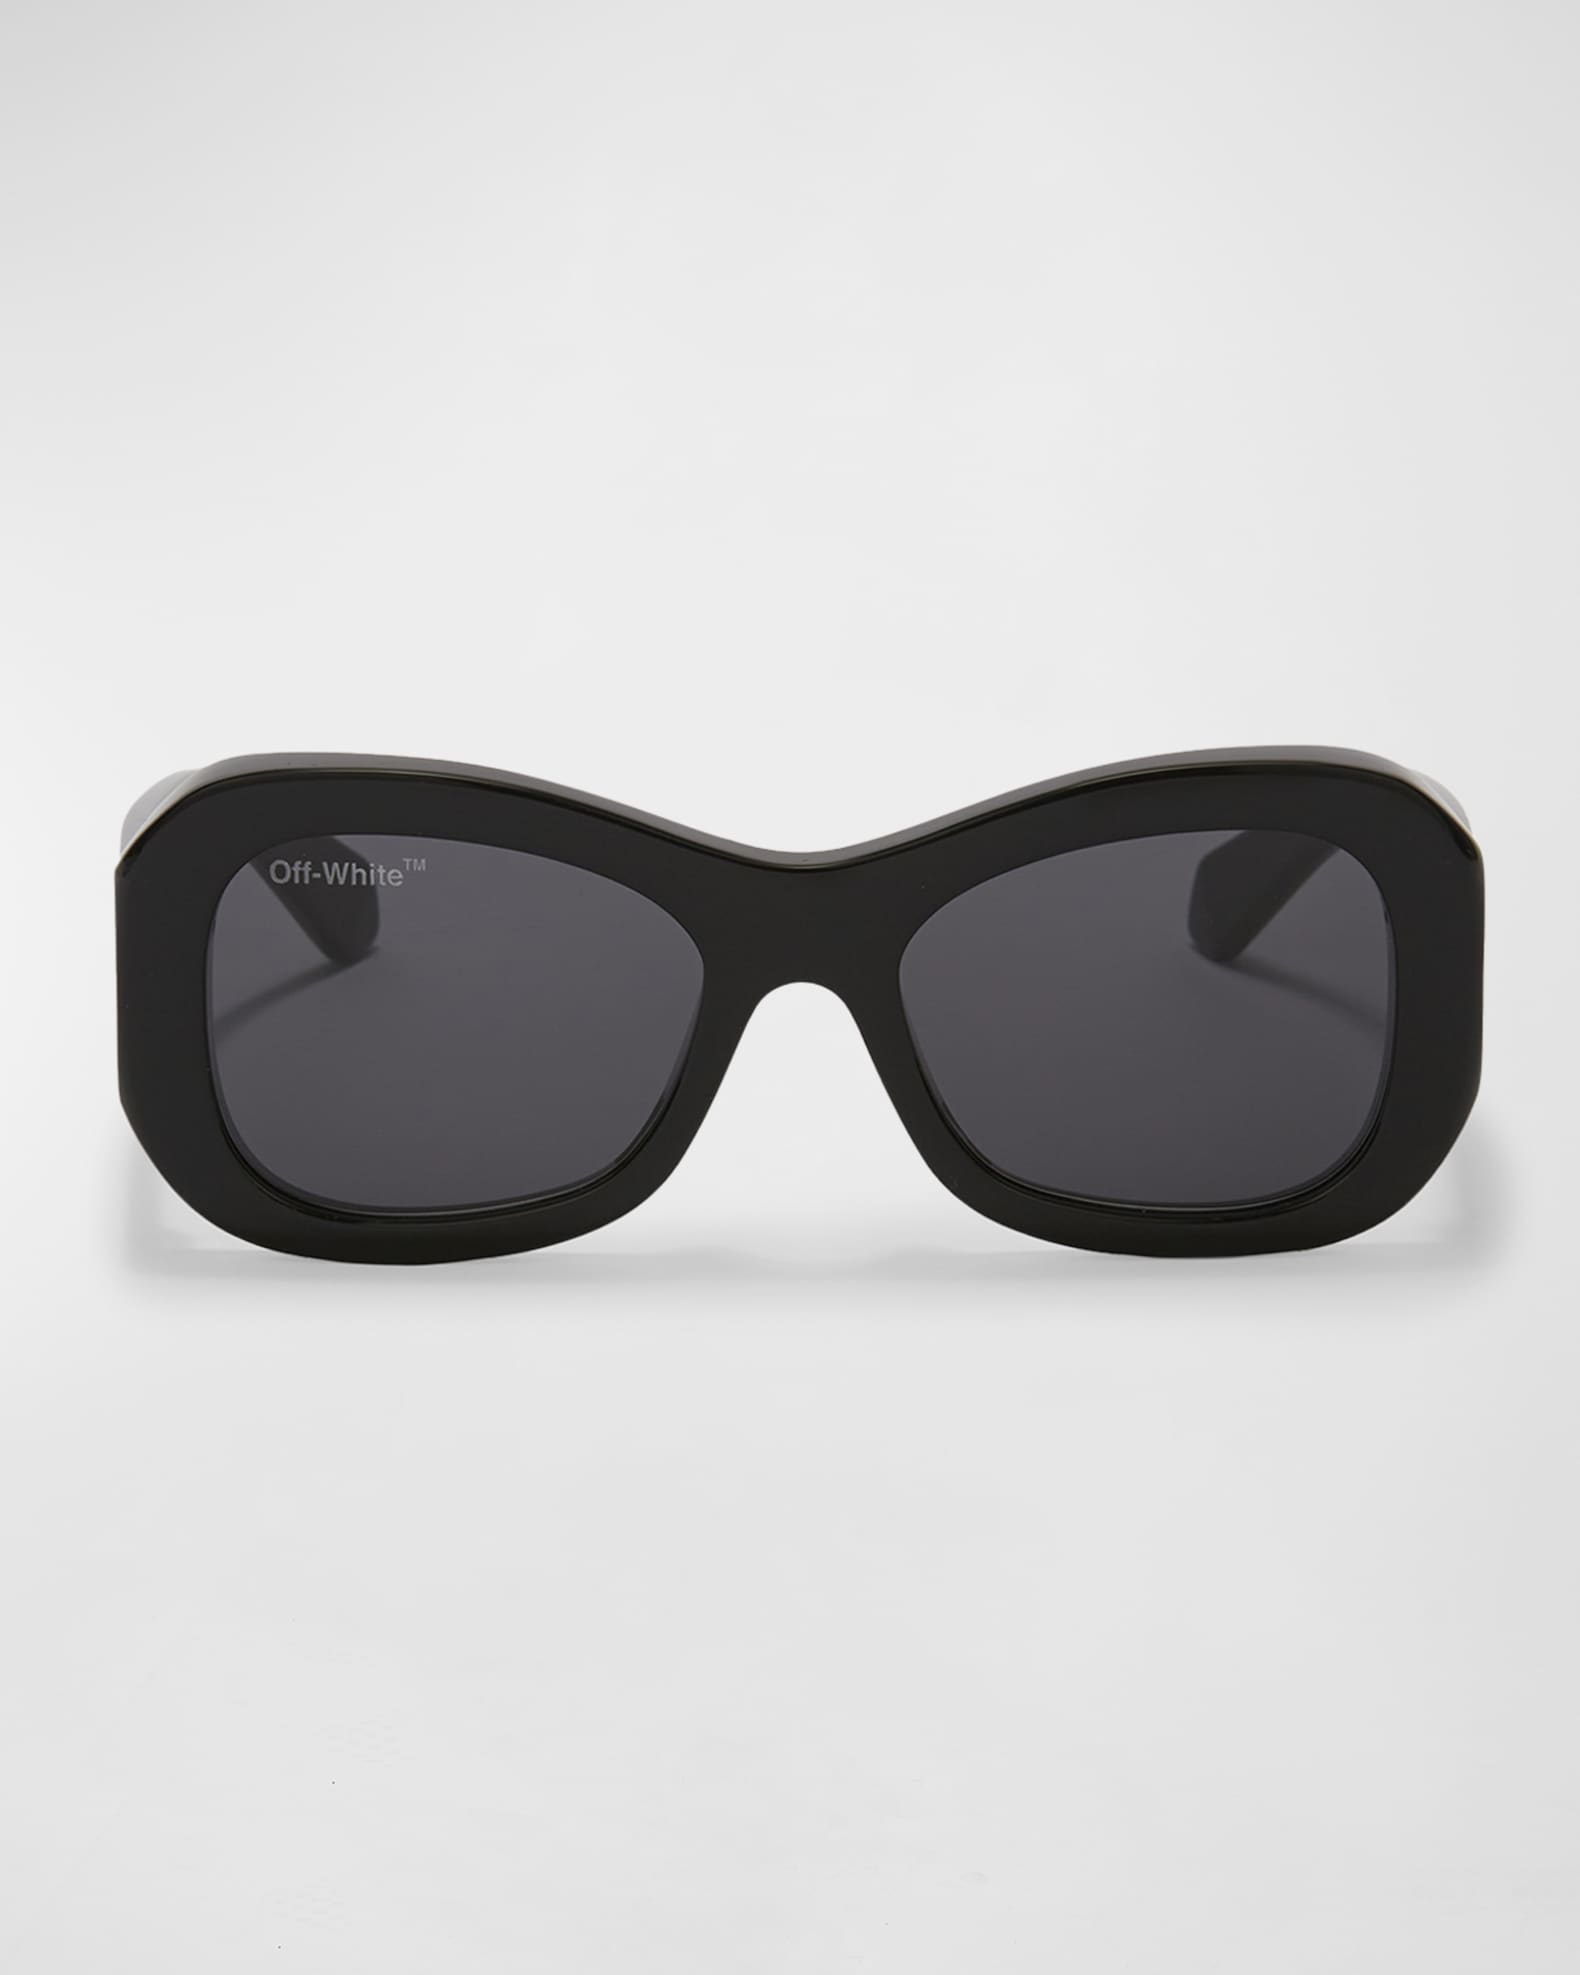 Off-White Pablo Logo Round Acetate Sunglasses, Black / Dark Grey, Women's, Sunglasses Round Sunglasses